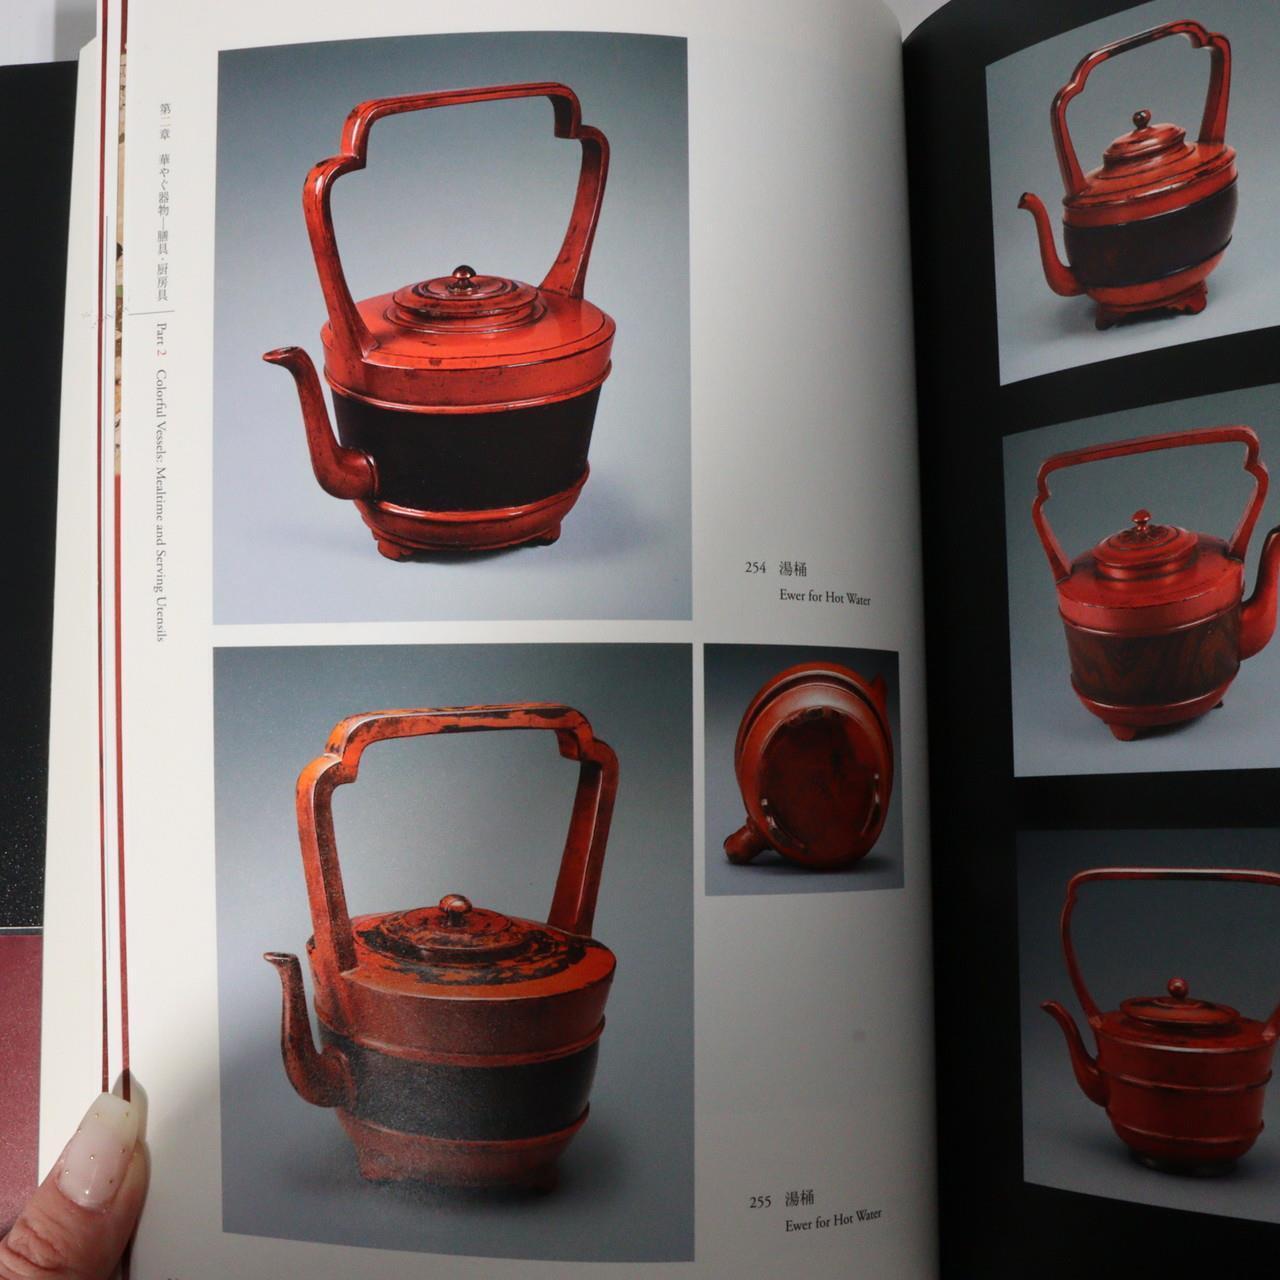 Japanese Antique Negoro Book over 400 masterpieces vermilion lacquer